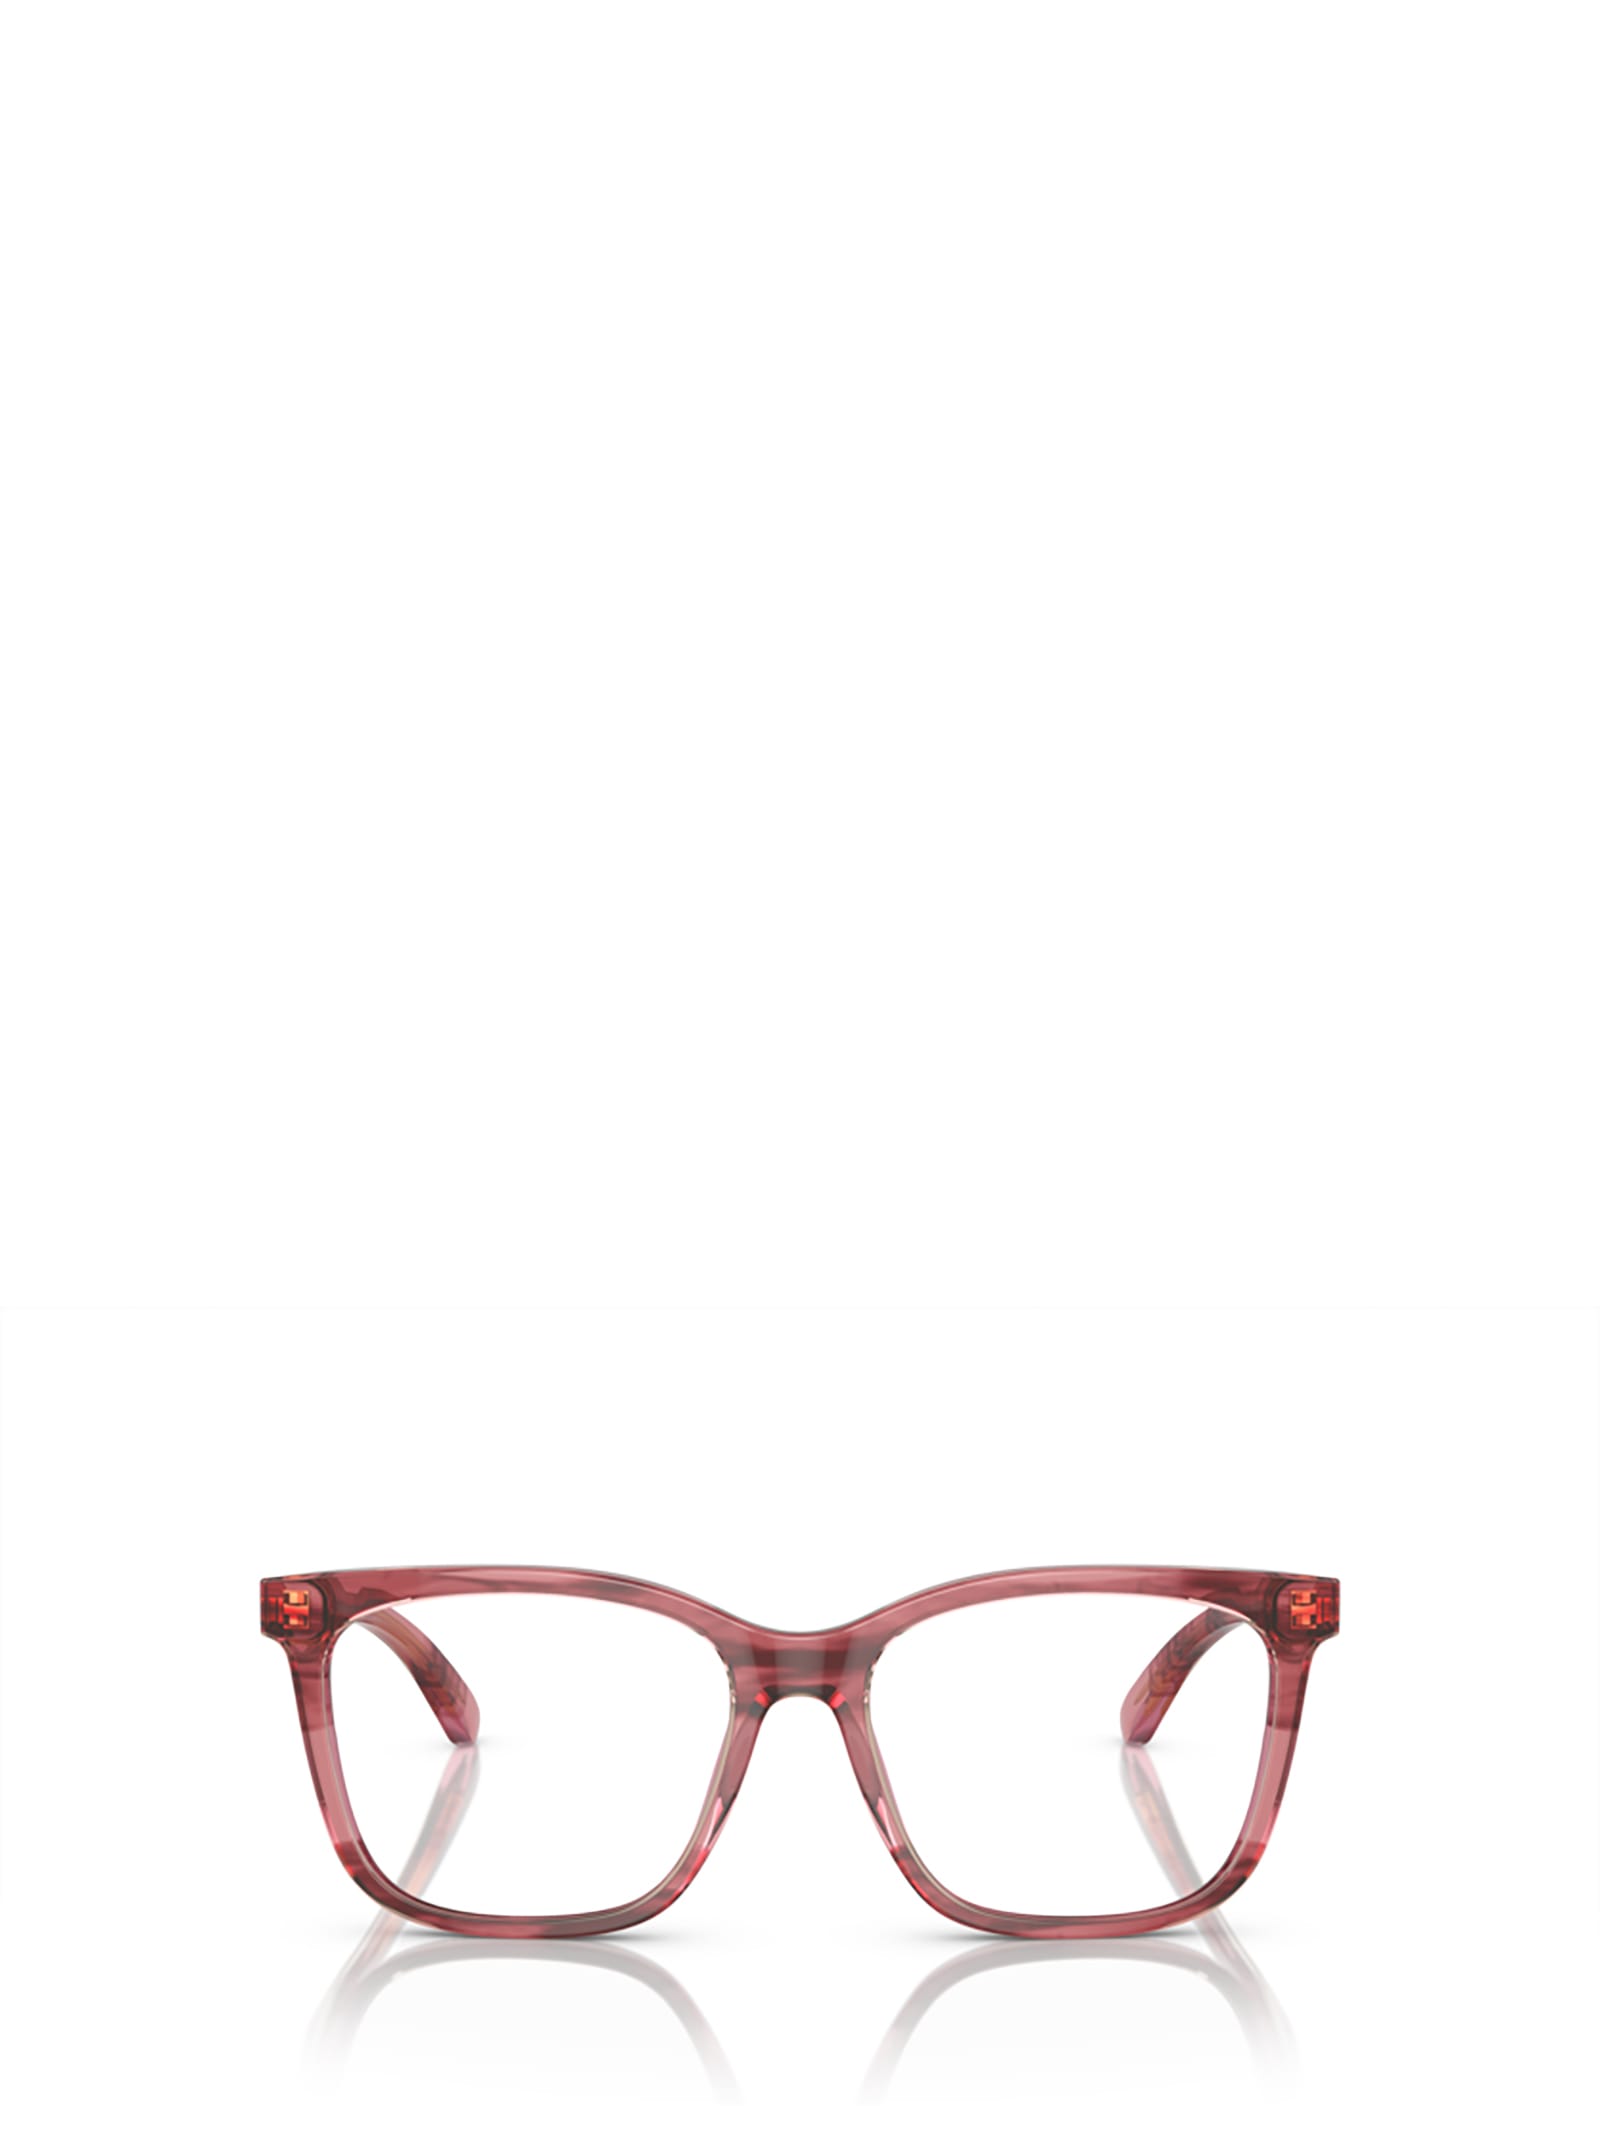 Emporio Armani Ea3228 Shiny Bordeaux / Top Light Brown Glasses